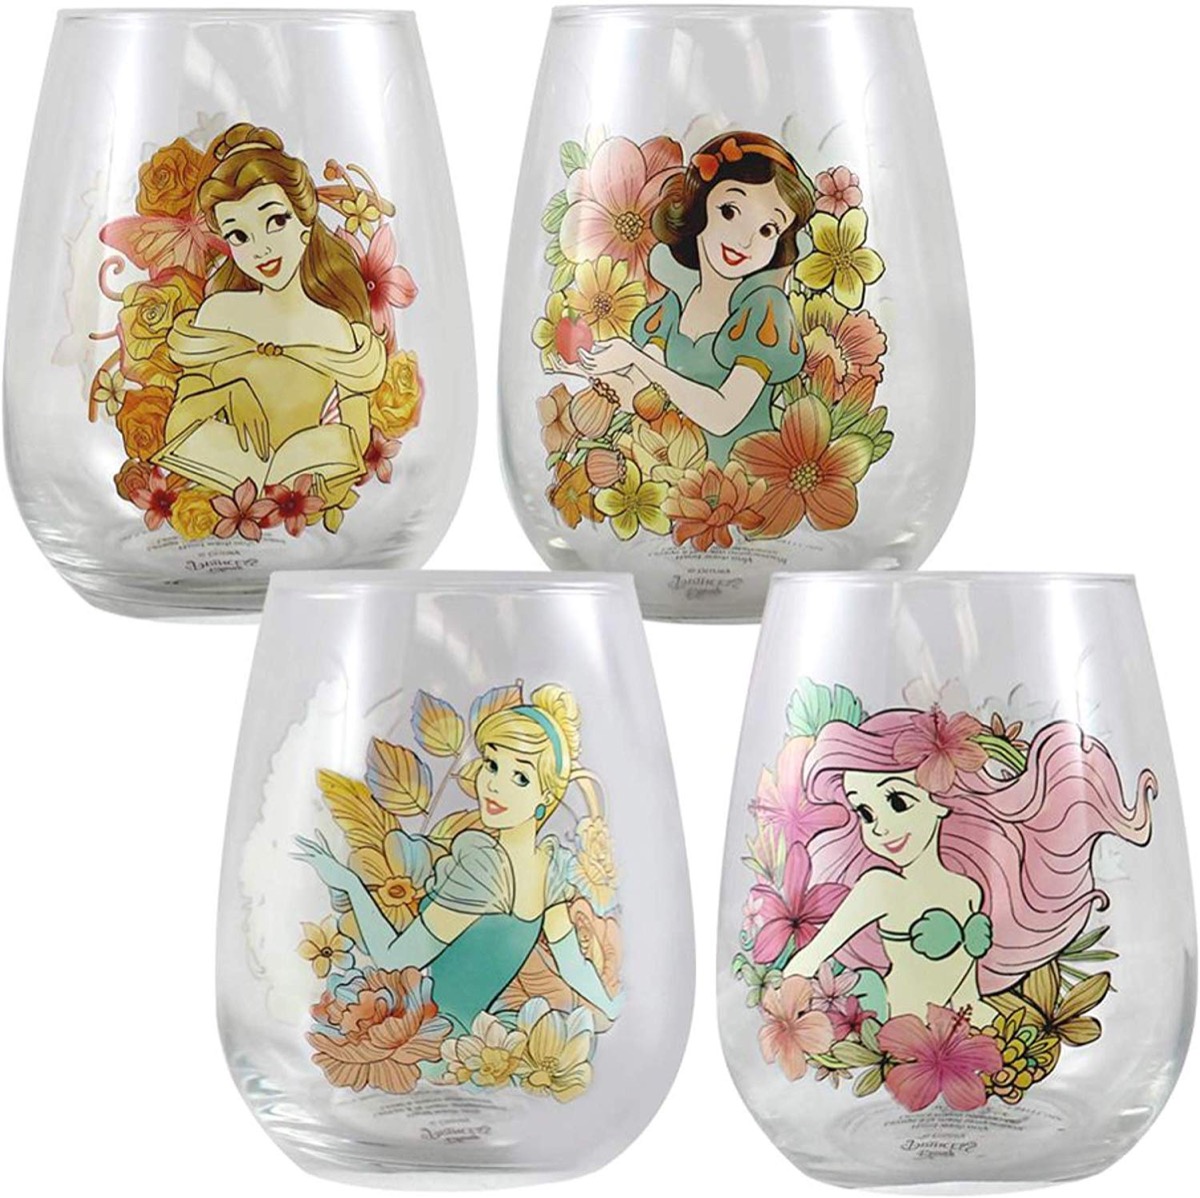 Disney princess glassware